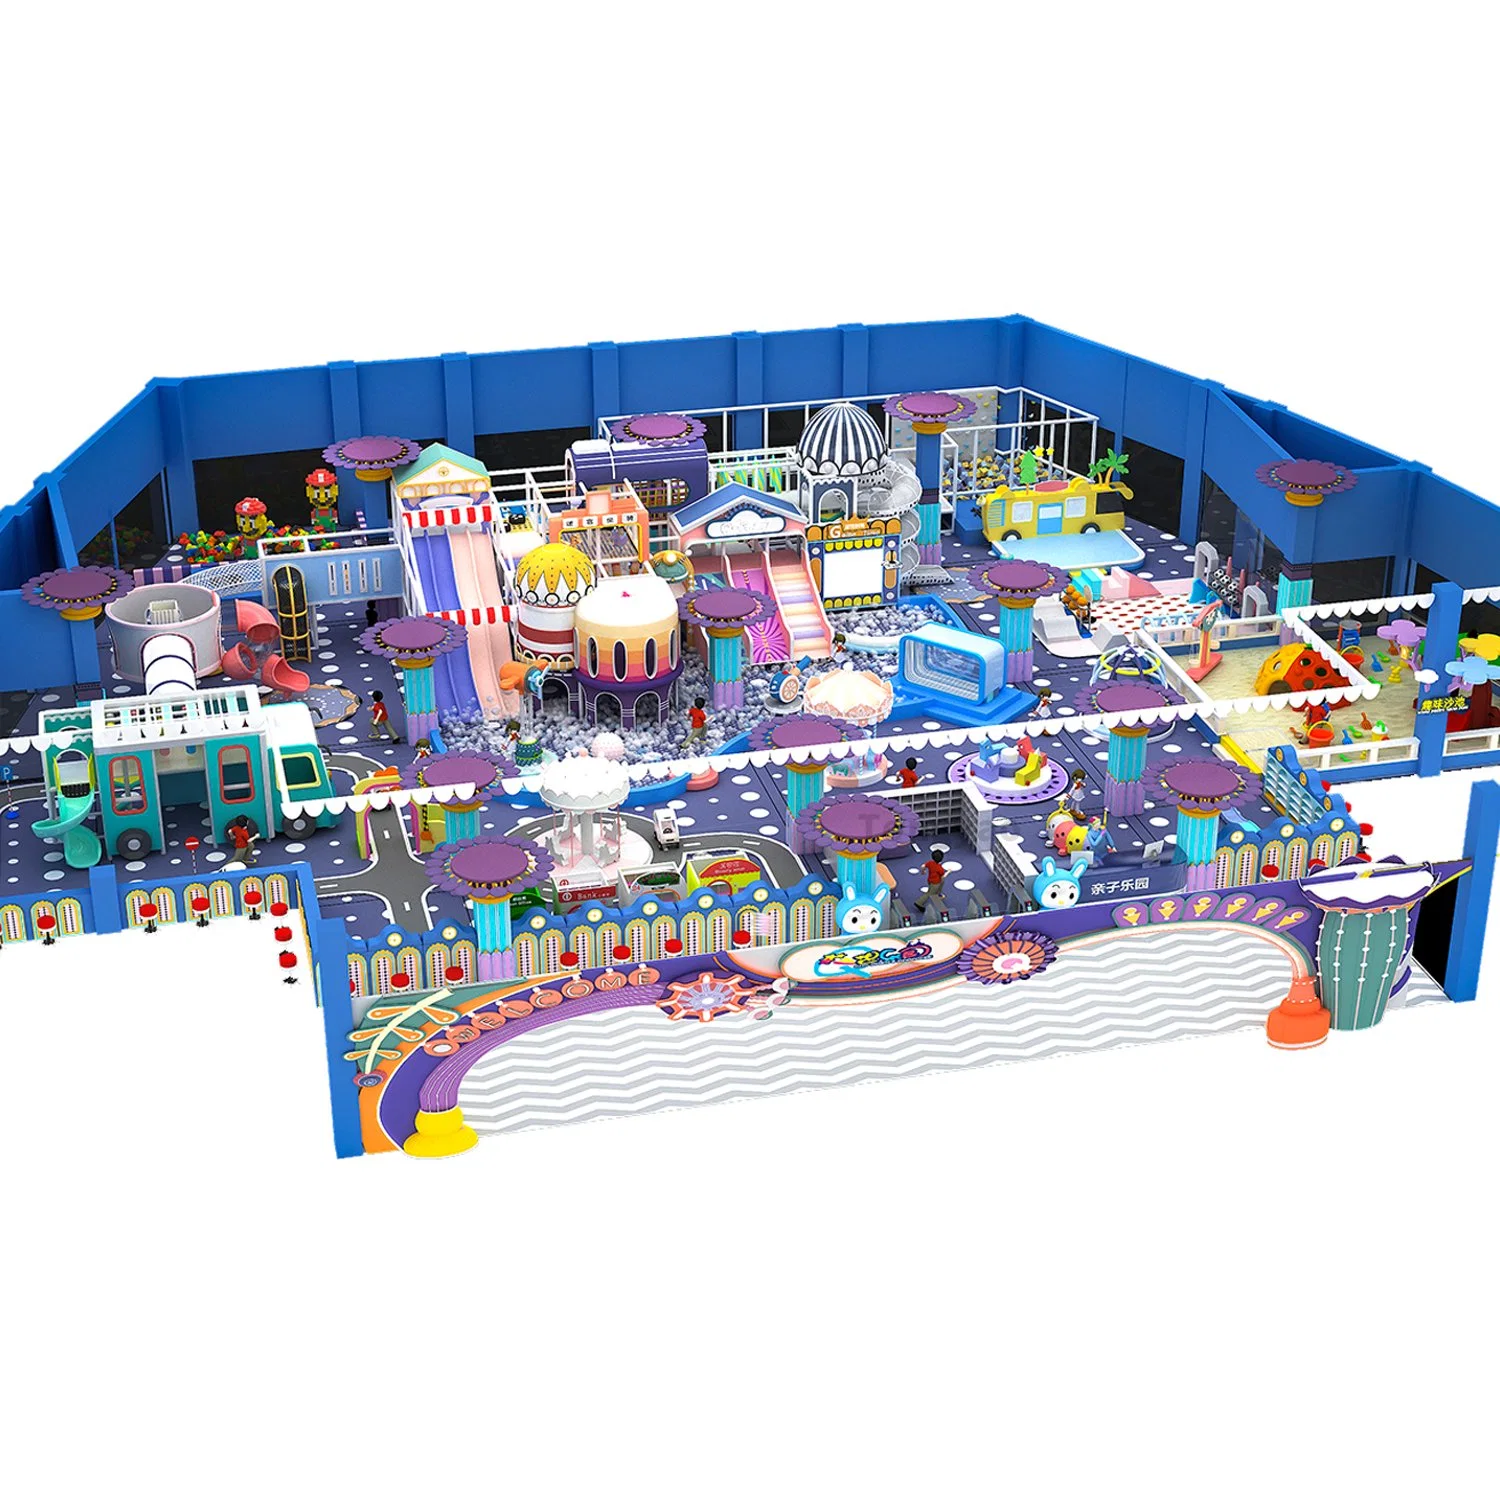 Niños Zona de juegos de juguetes Slide Trampoline Amusement Park Soft Play Interior Parque infantil